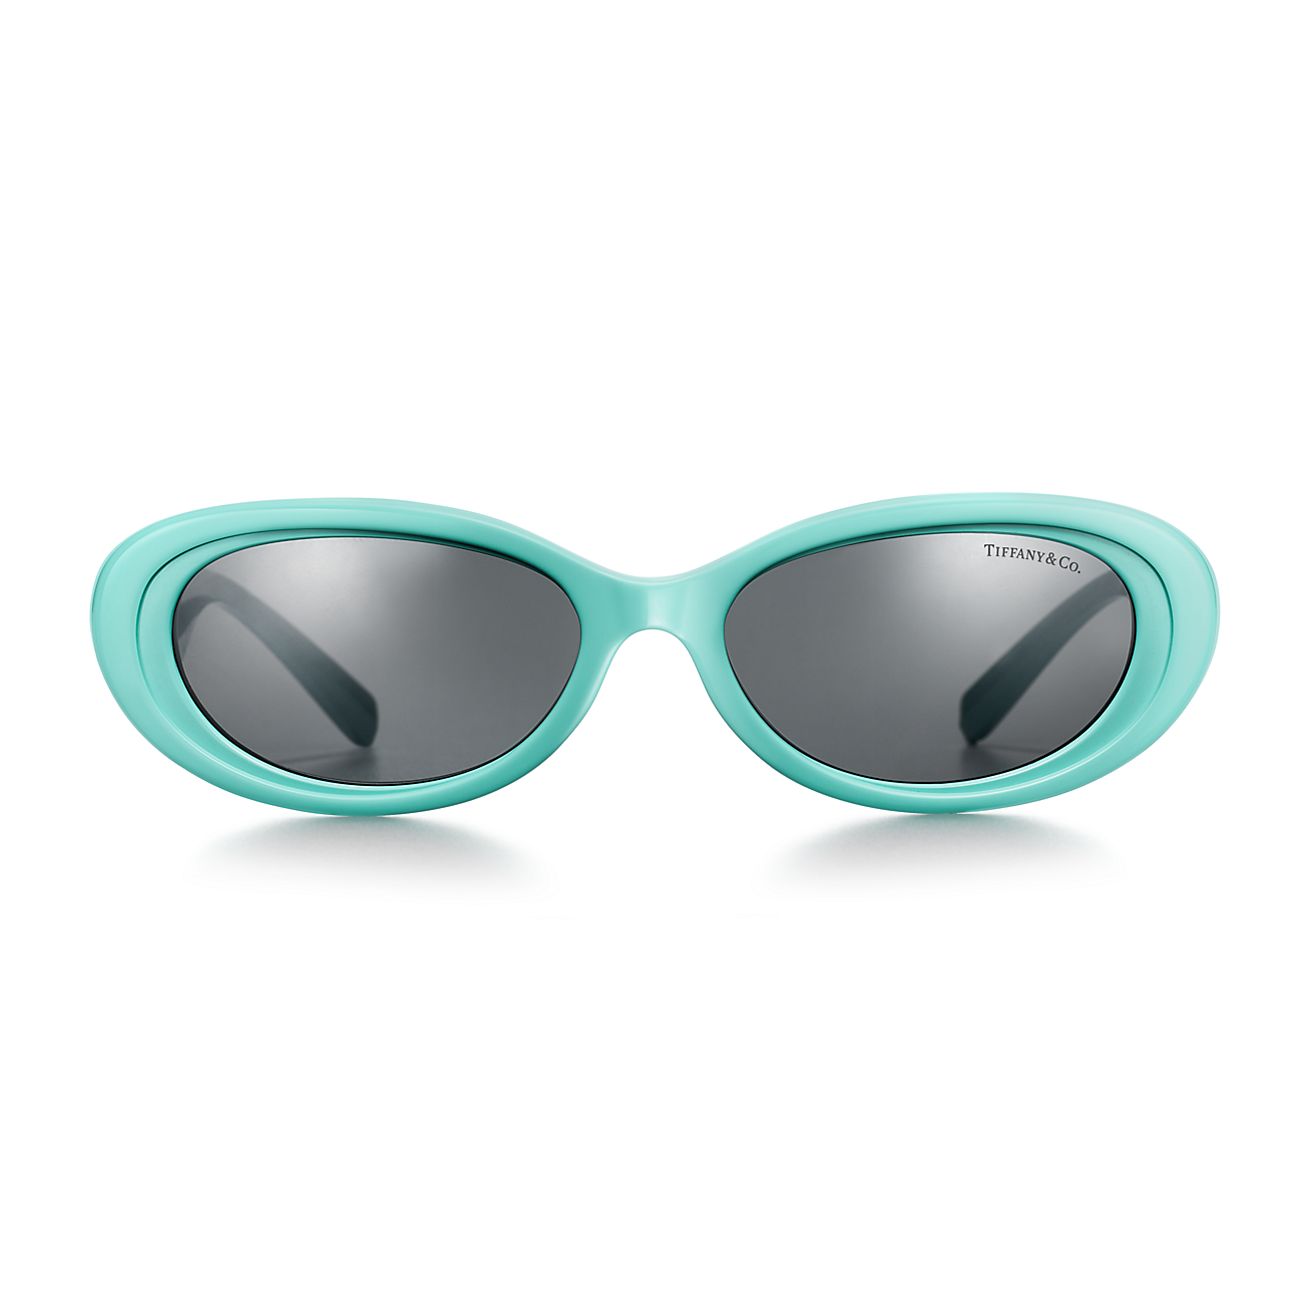 Return to Tiffany® Sunglasses